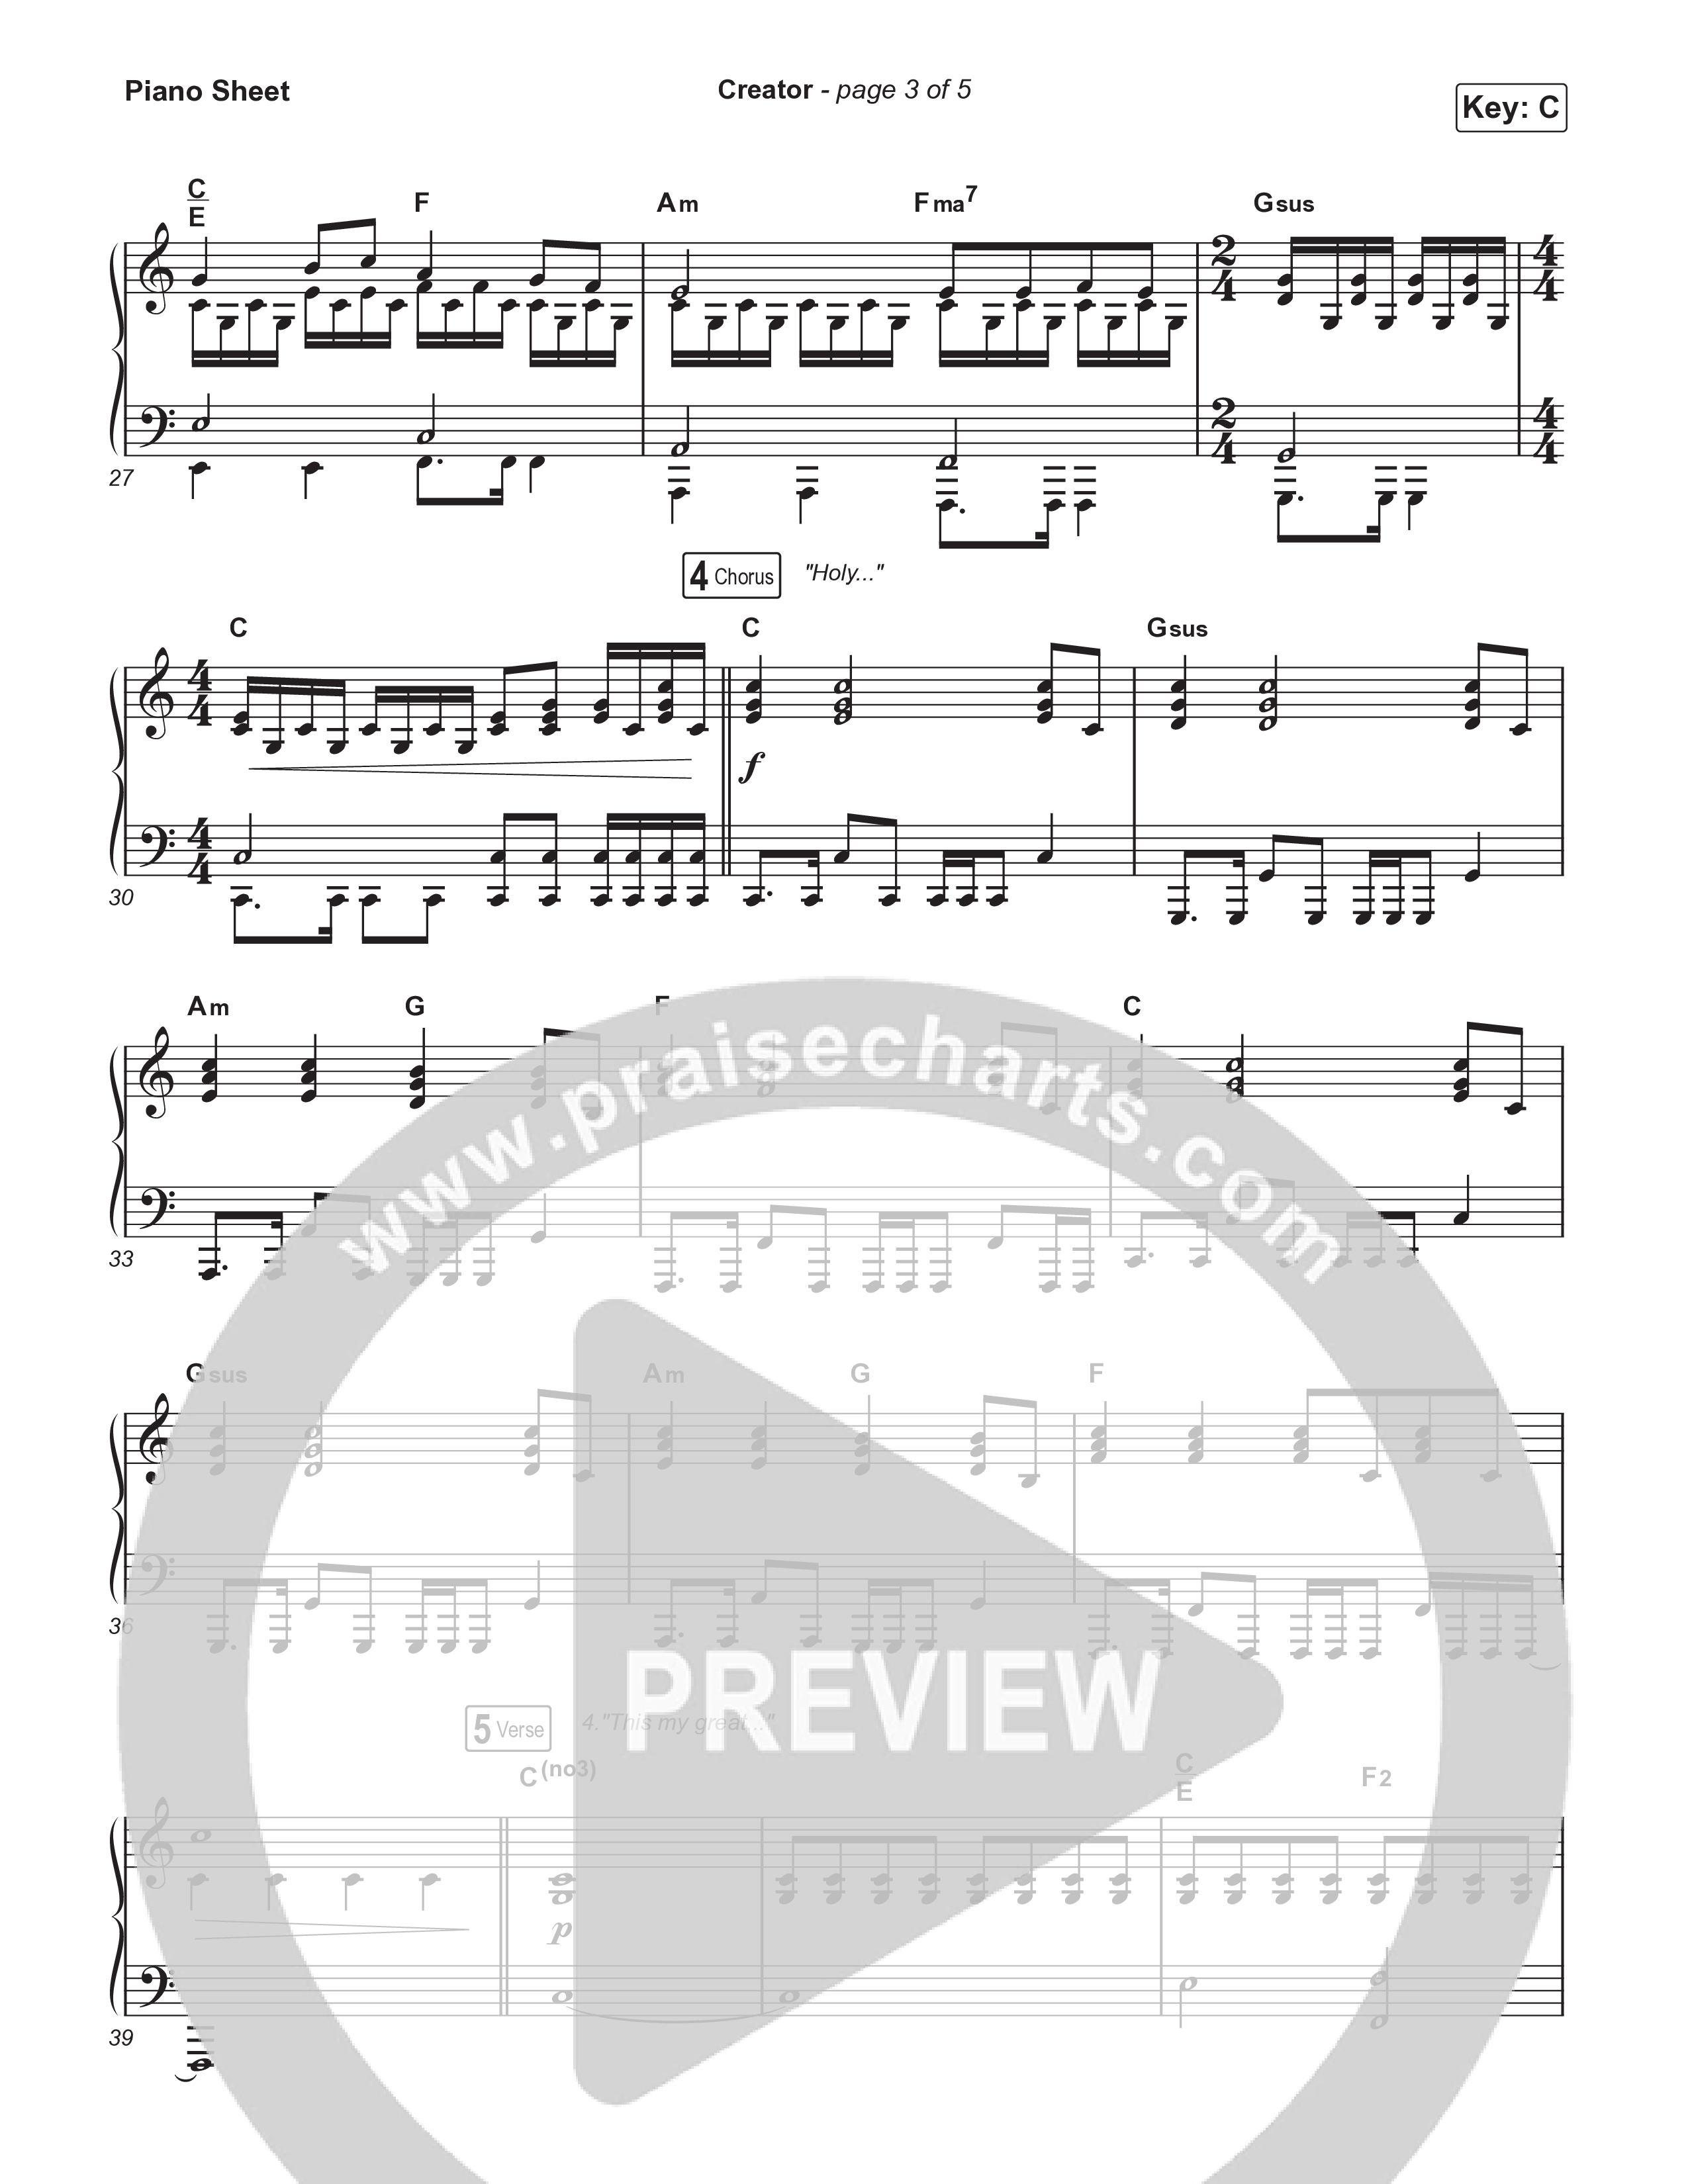 Creator (Worship Choir/SAB) Piano Sheet (Phil Wickham)